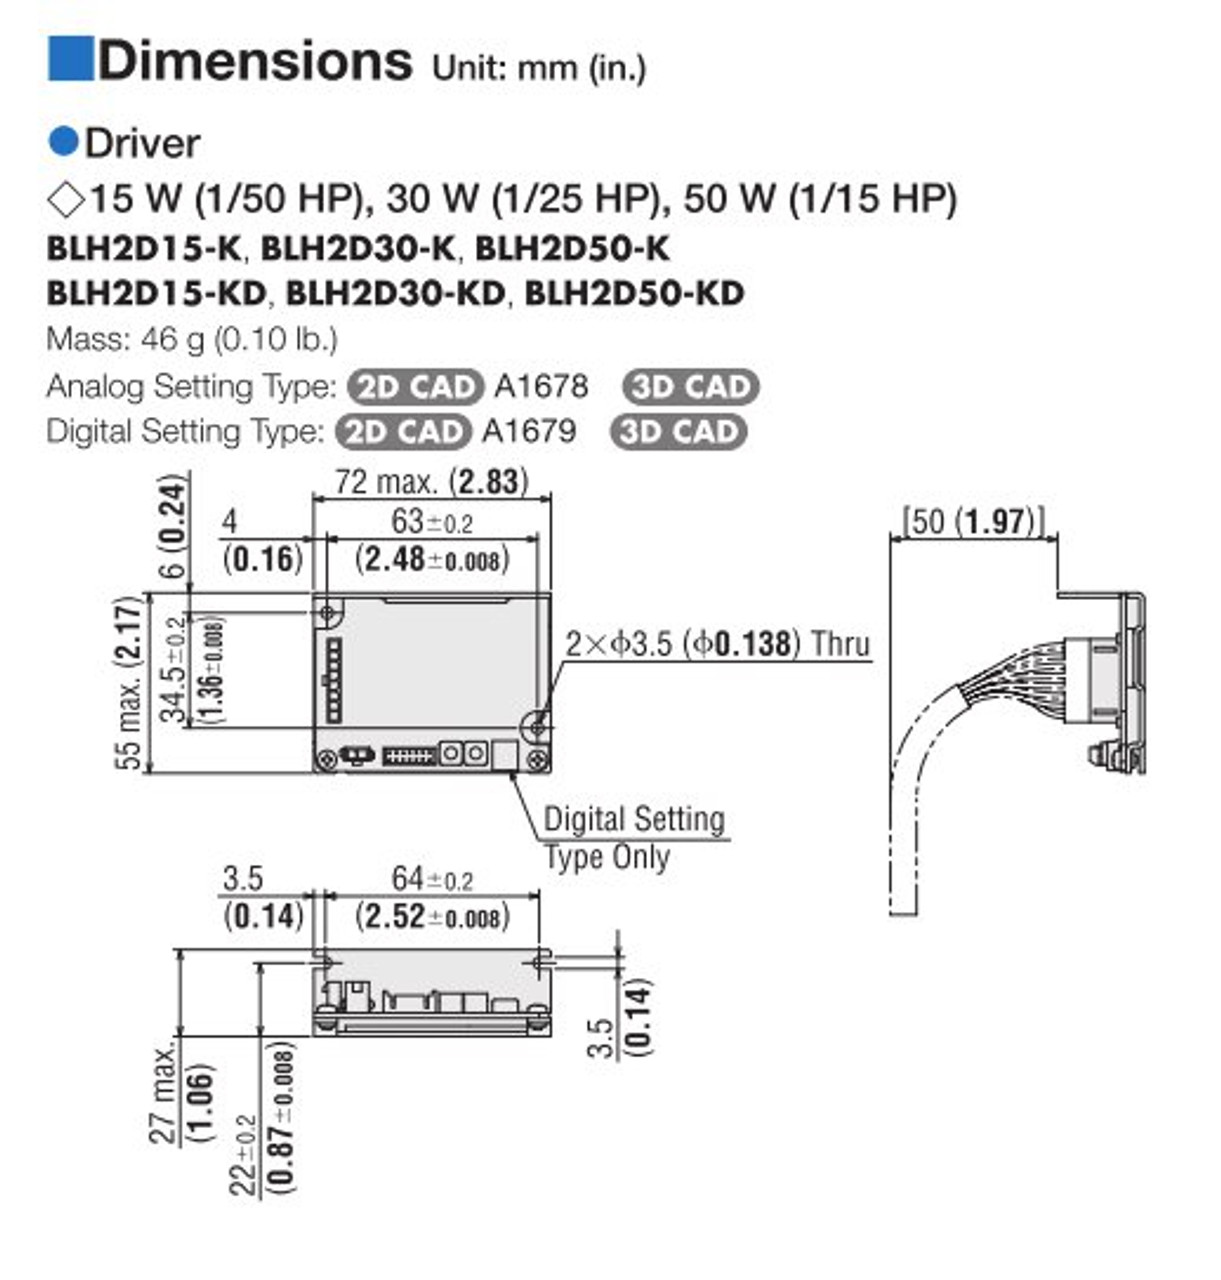 BLHM450KC-100 / BLH2D50-K - Dimensions